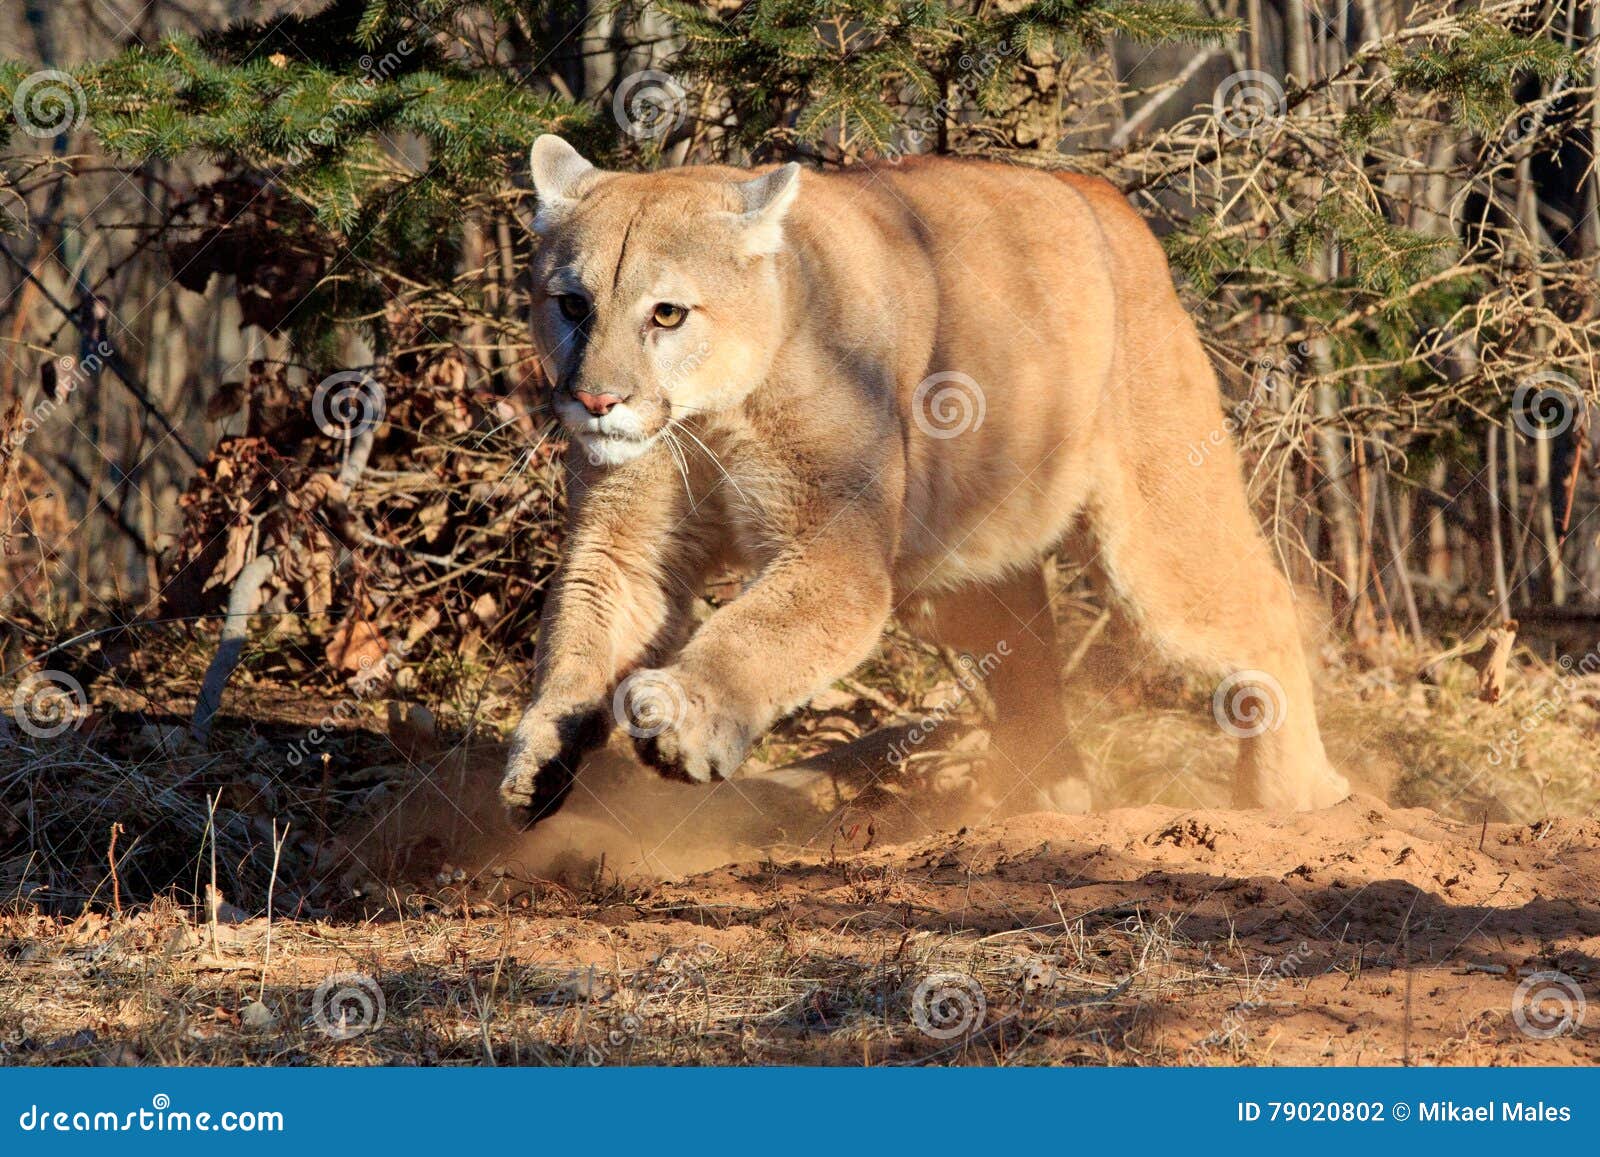 mountain lion running towards deer